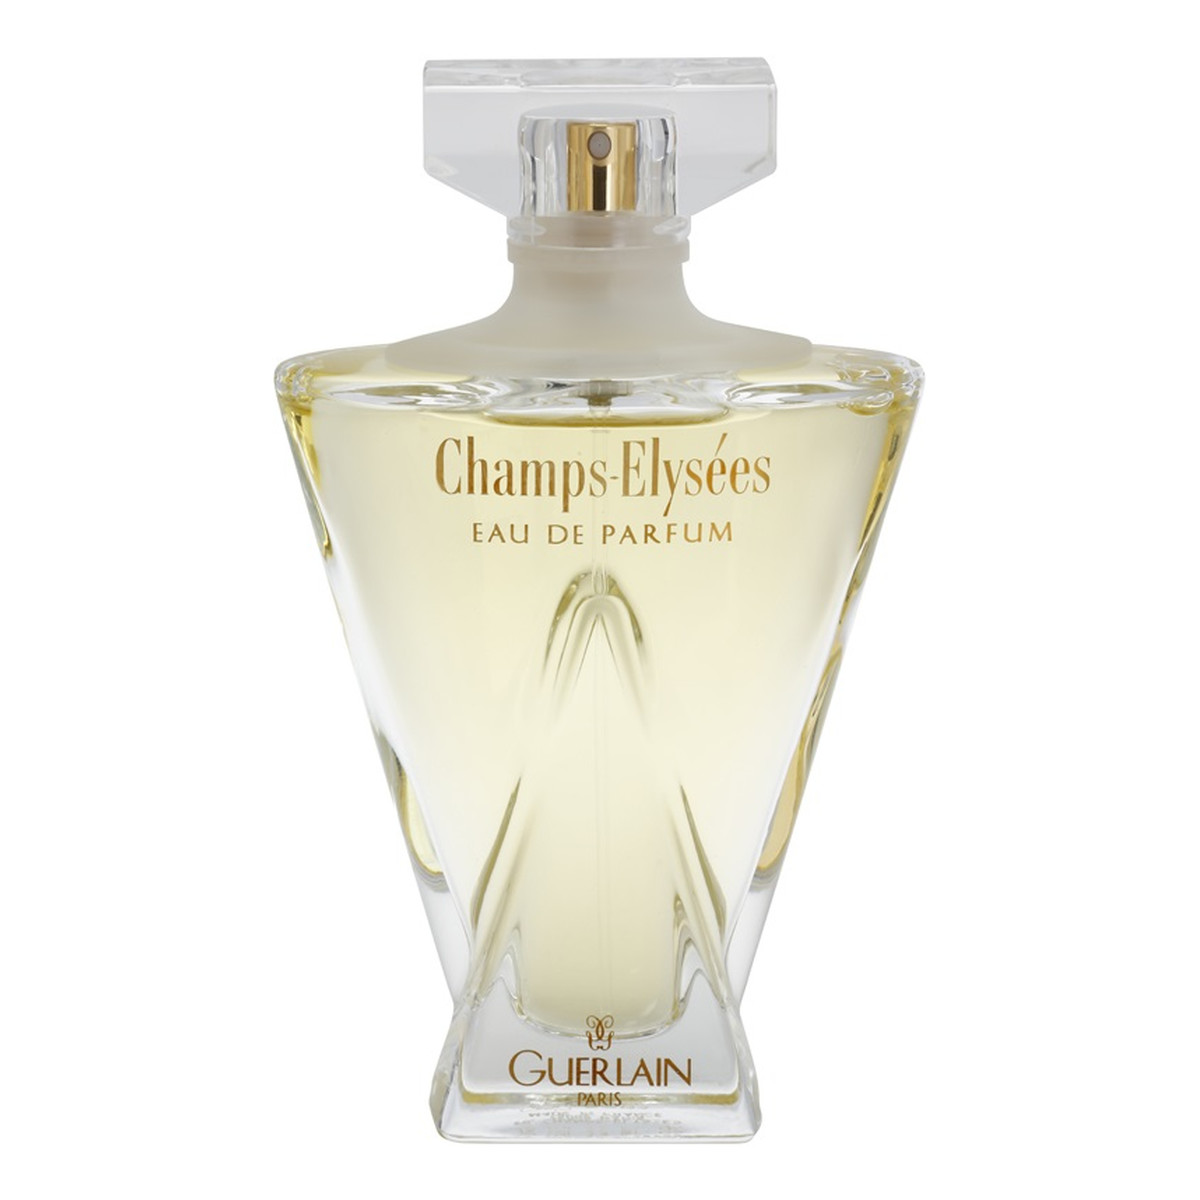 Guerlain Champs-Élysées Woda perfumowana dla kobiet 75ml